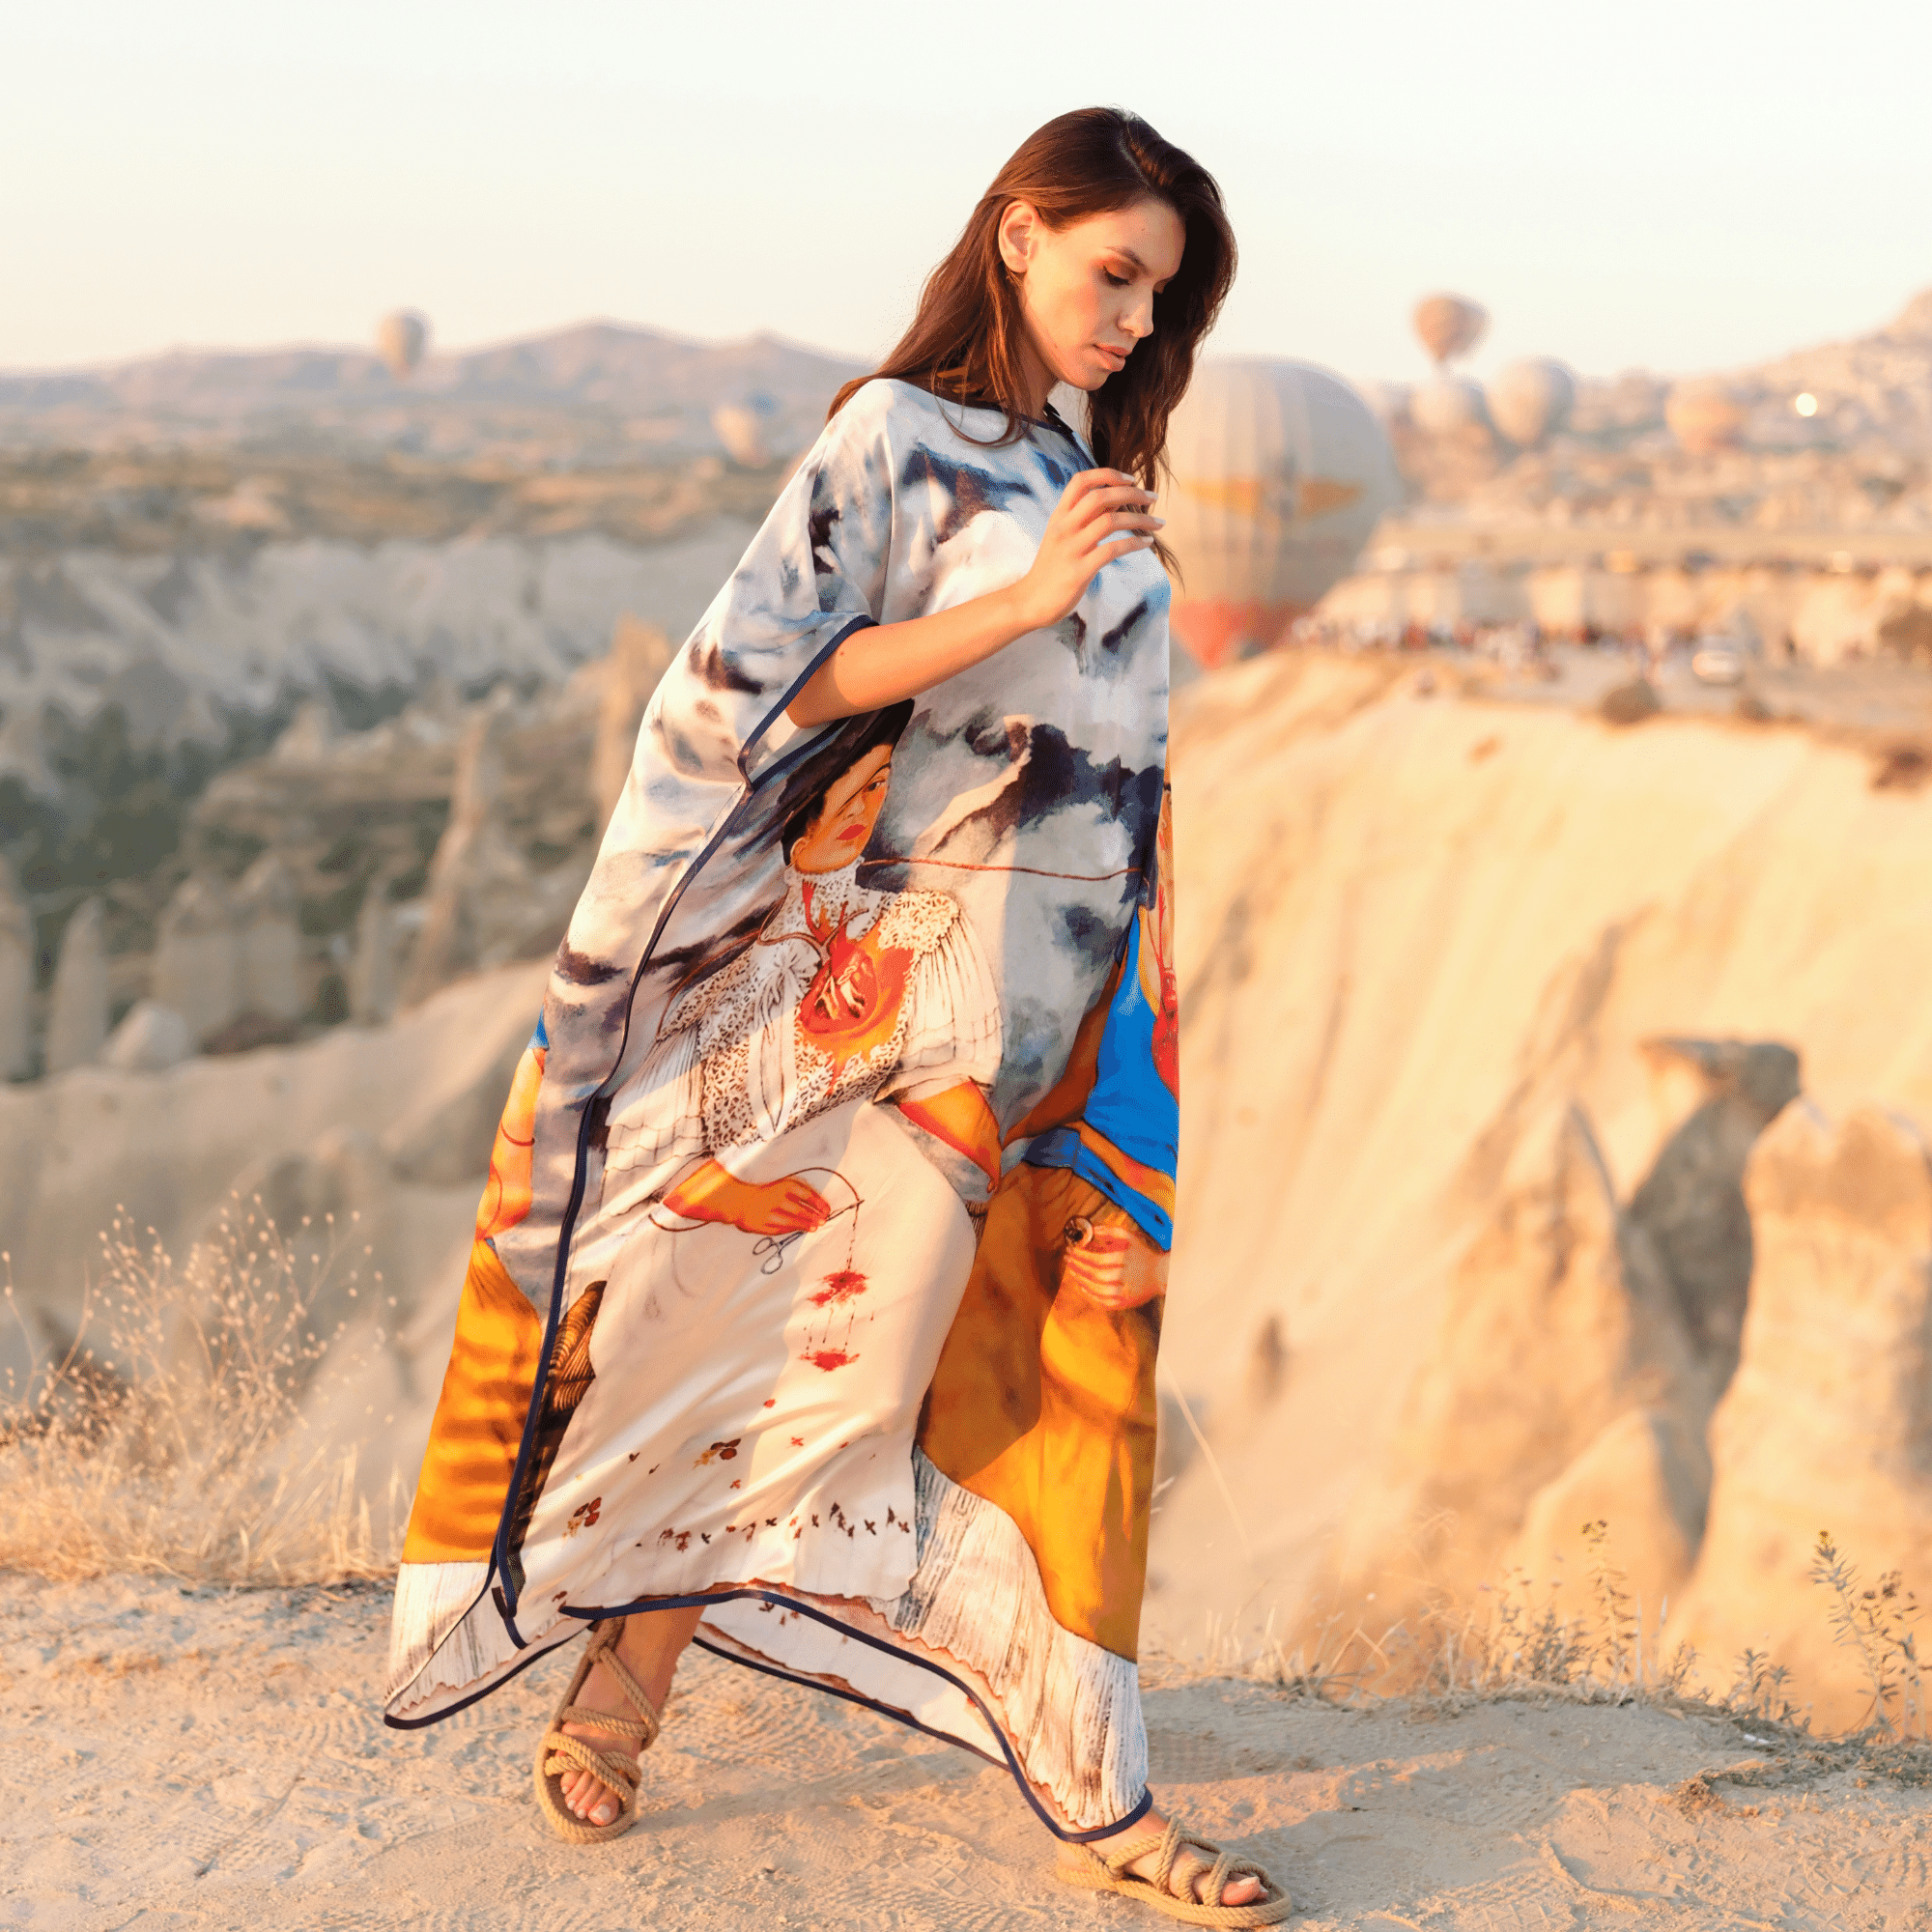 %100 Silk Plus Size High Quality Long Dress For Woman | Frida Kahlo Print